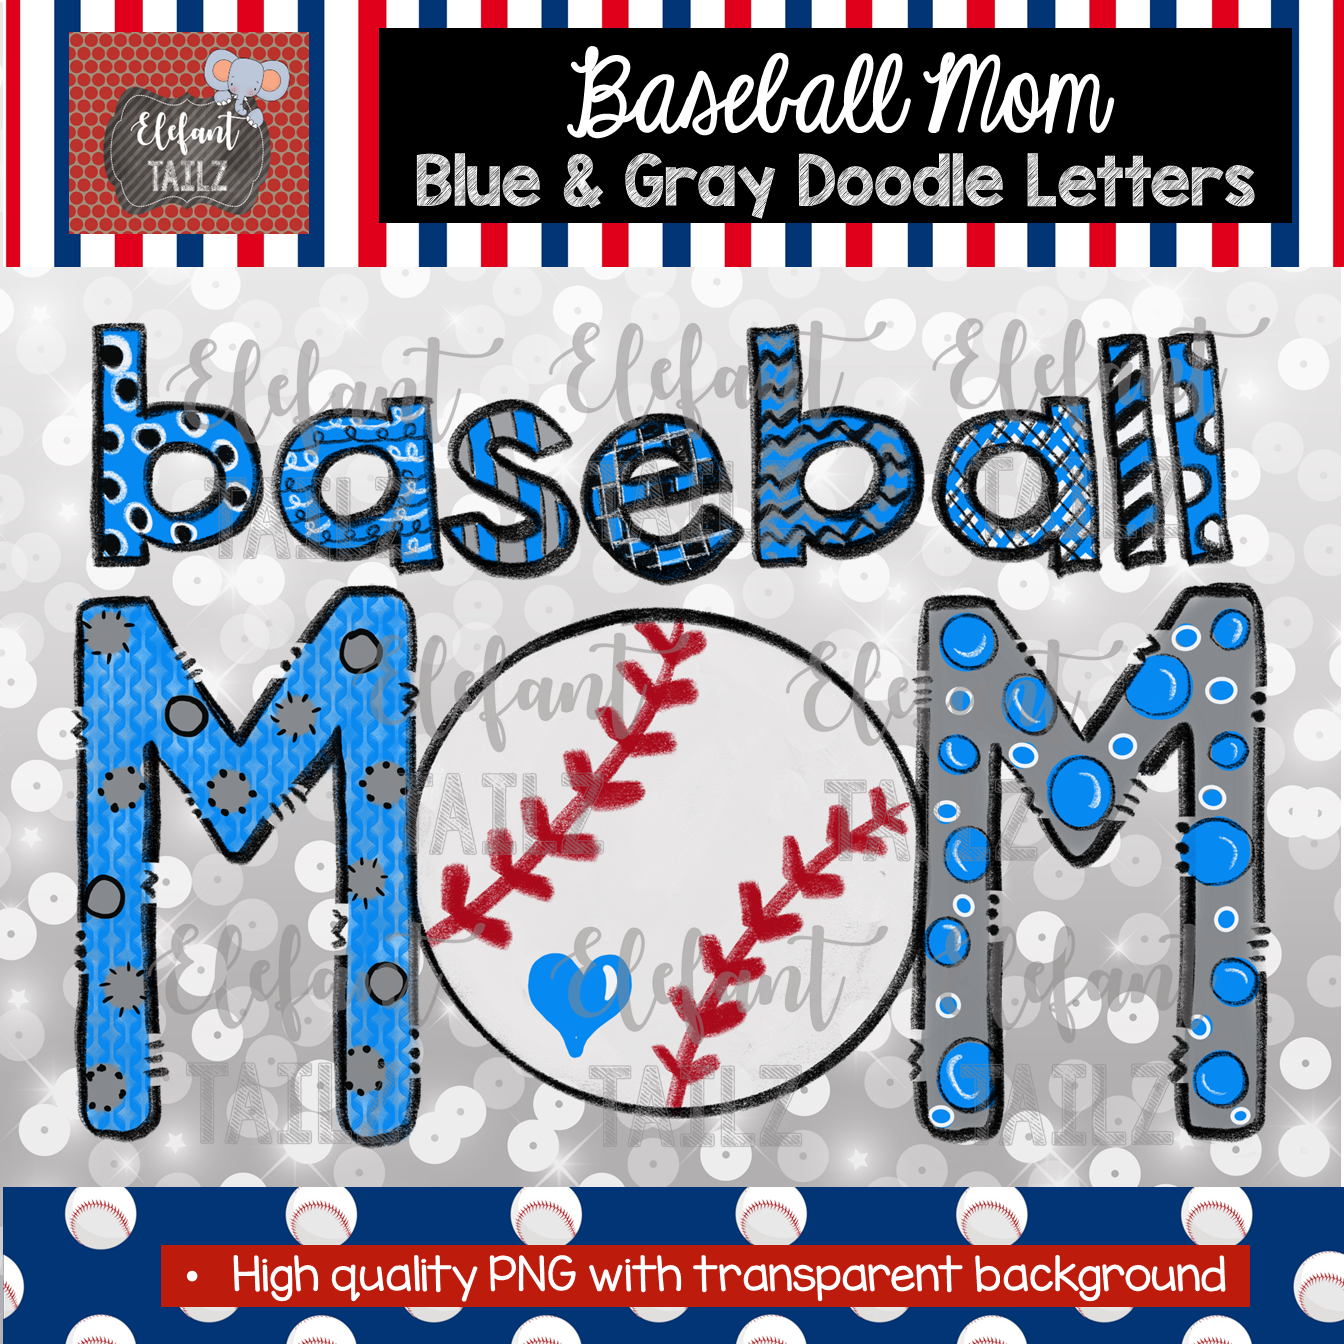 Baseball Mom Doodle Letters - Blue & Gray